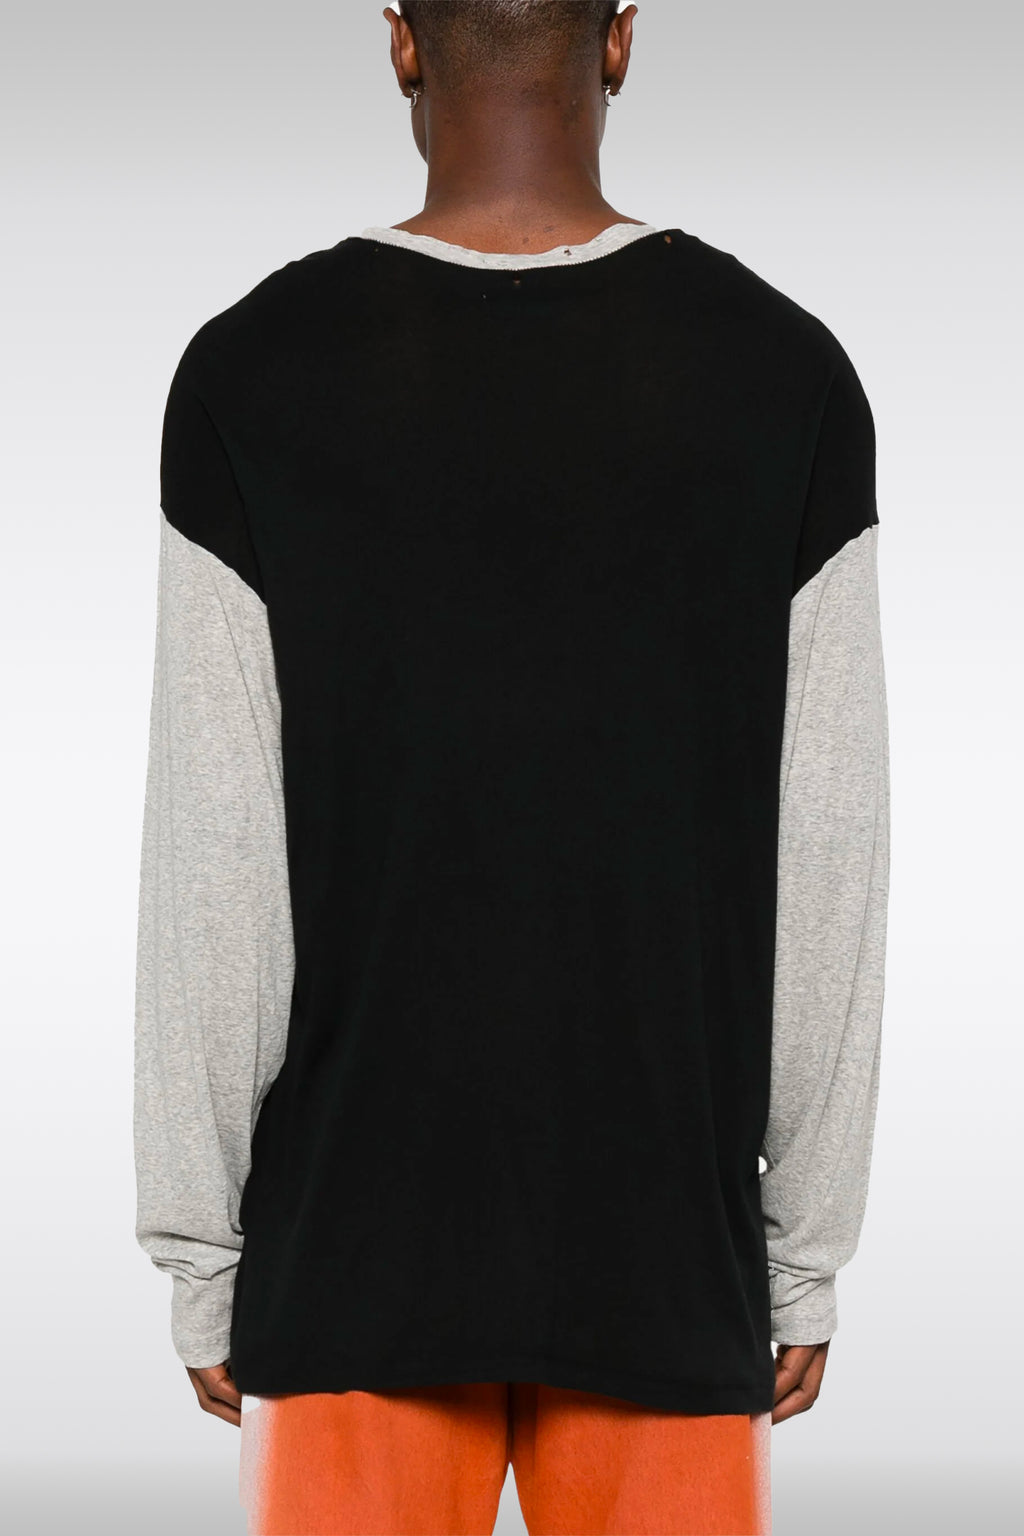 alt-image__T-shirt-manica-lunga-nera-con-stampa-frontale---Unisex-Contrast-Light-Jersey-Sweats